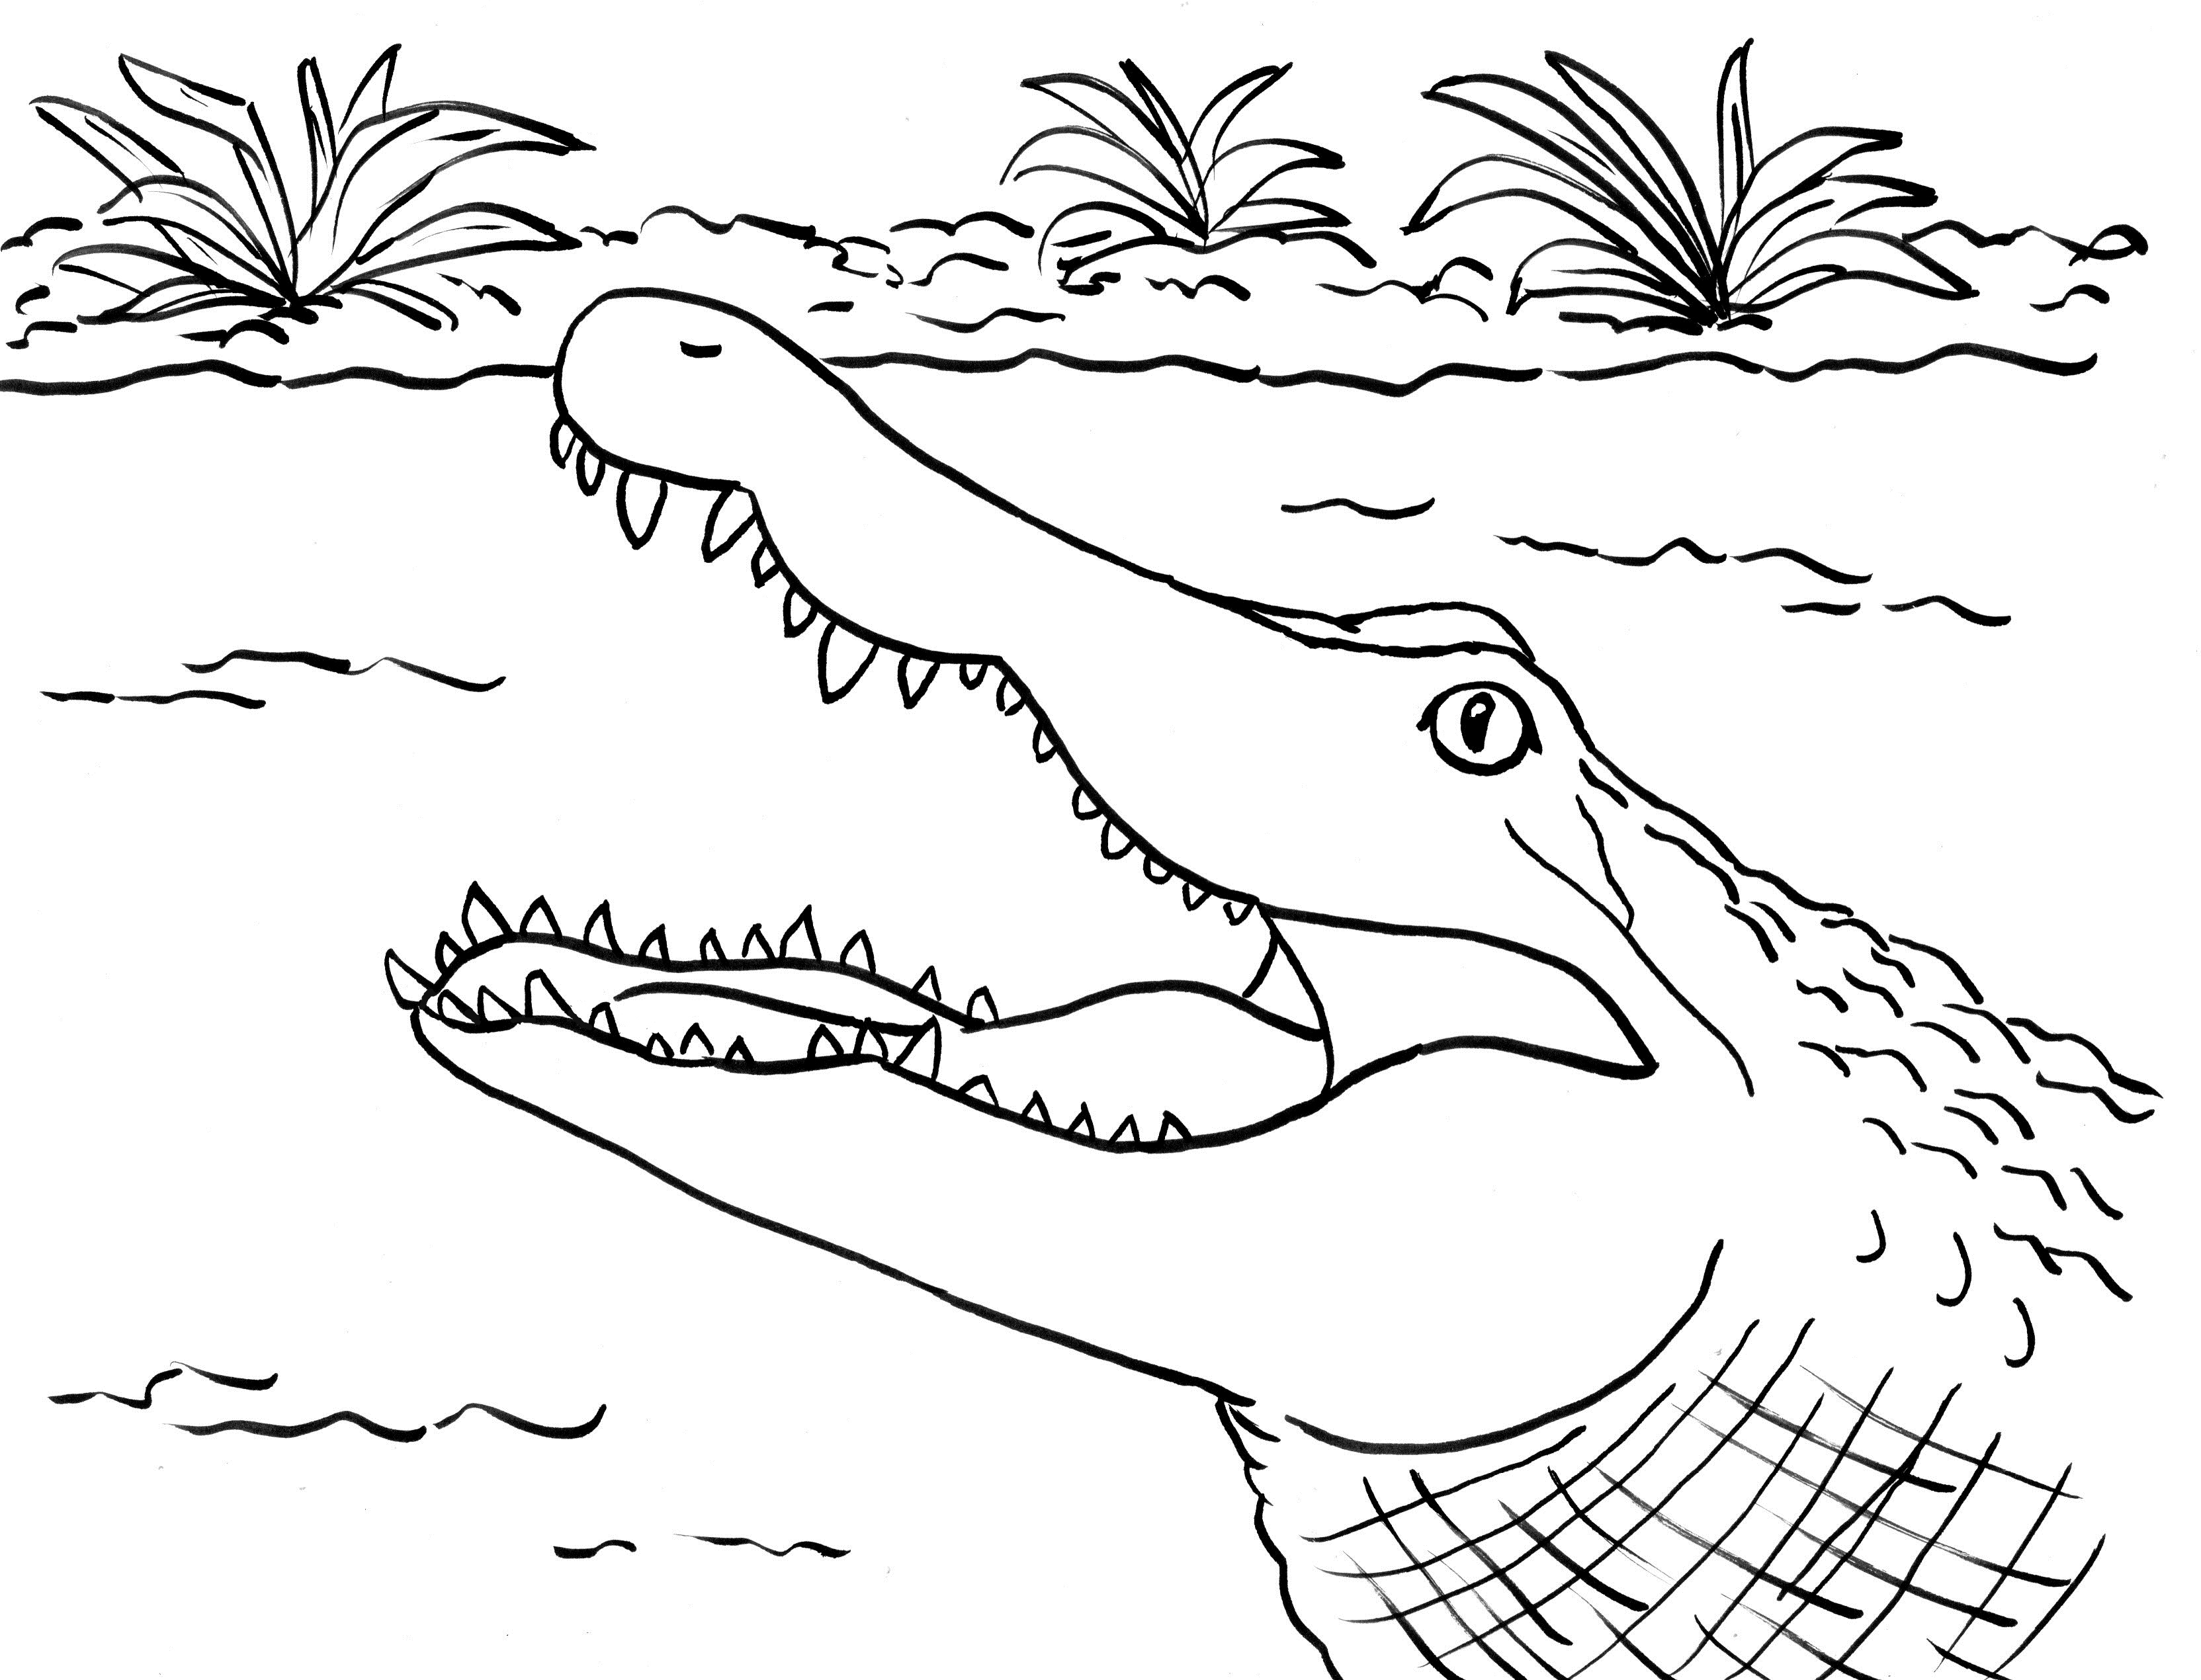 Alligator Coloring Page - Art Starts